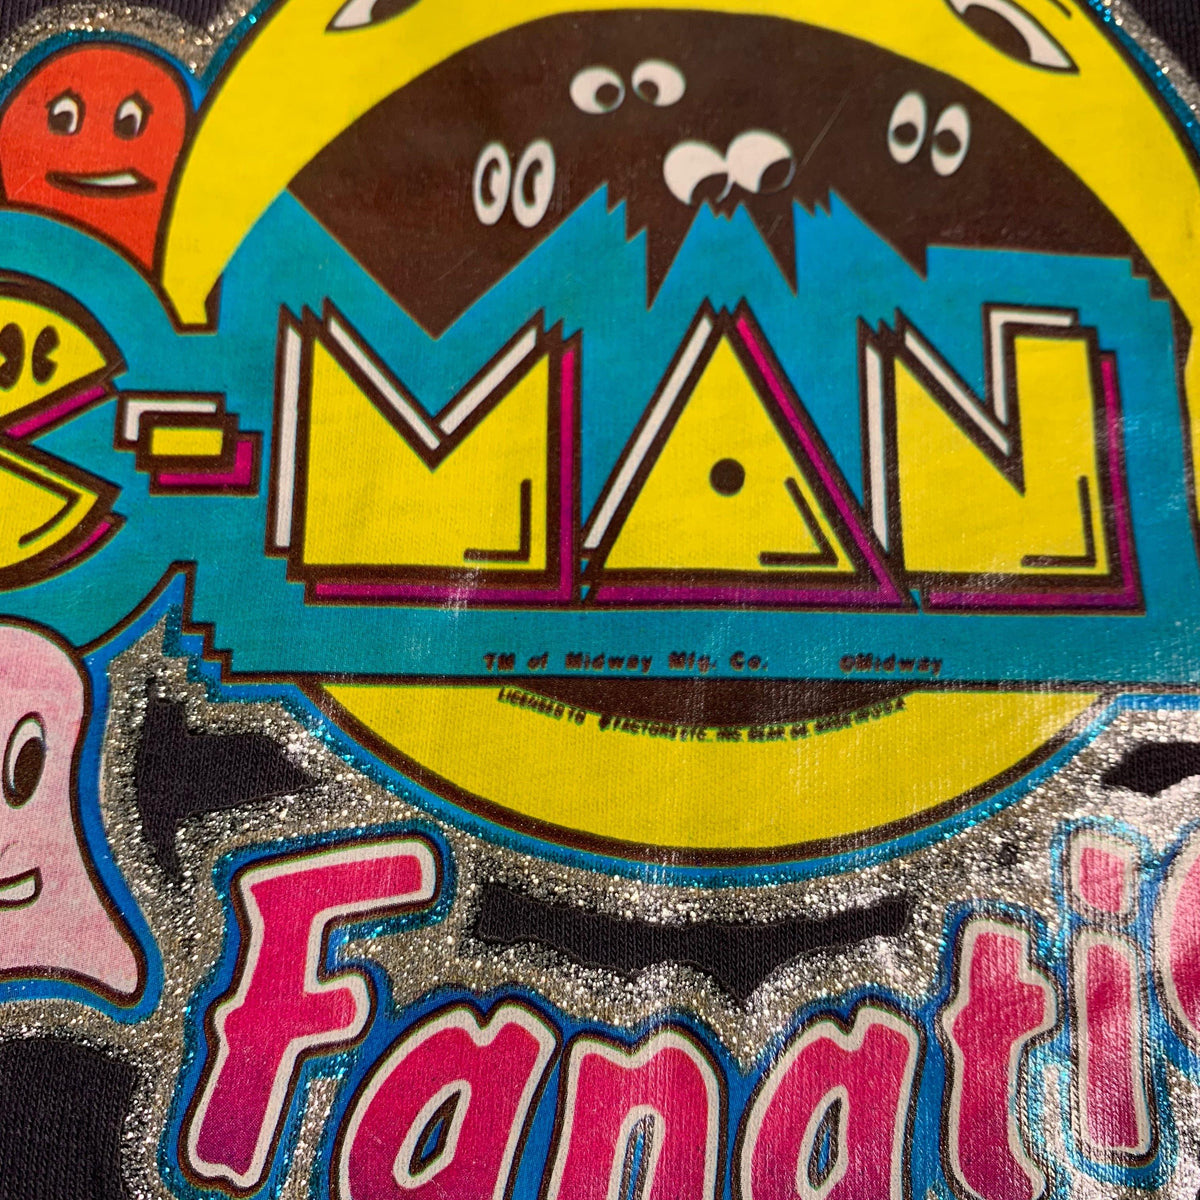 Vintage Pacman &quot;Iron on&quot; T-Shirt - jointcustodydc